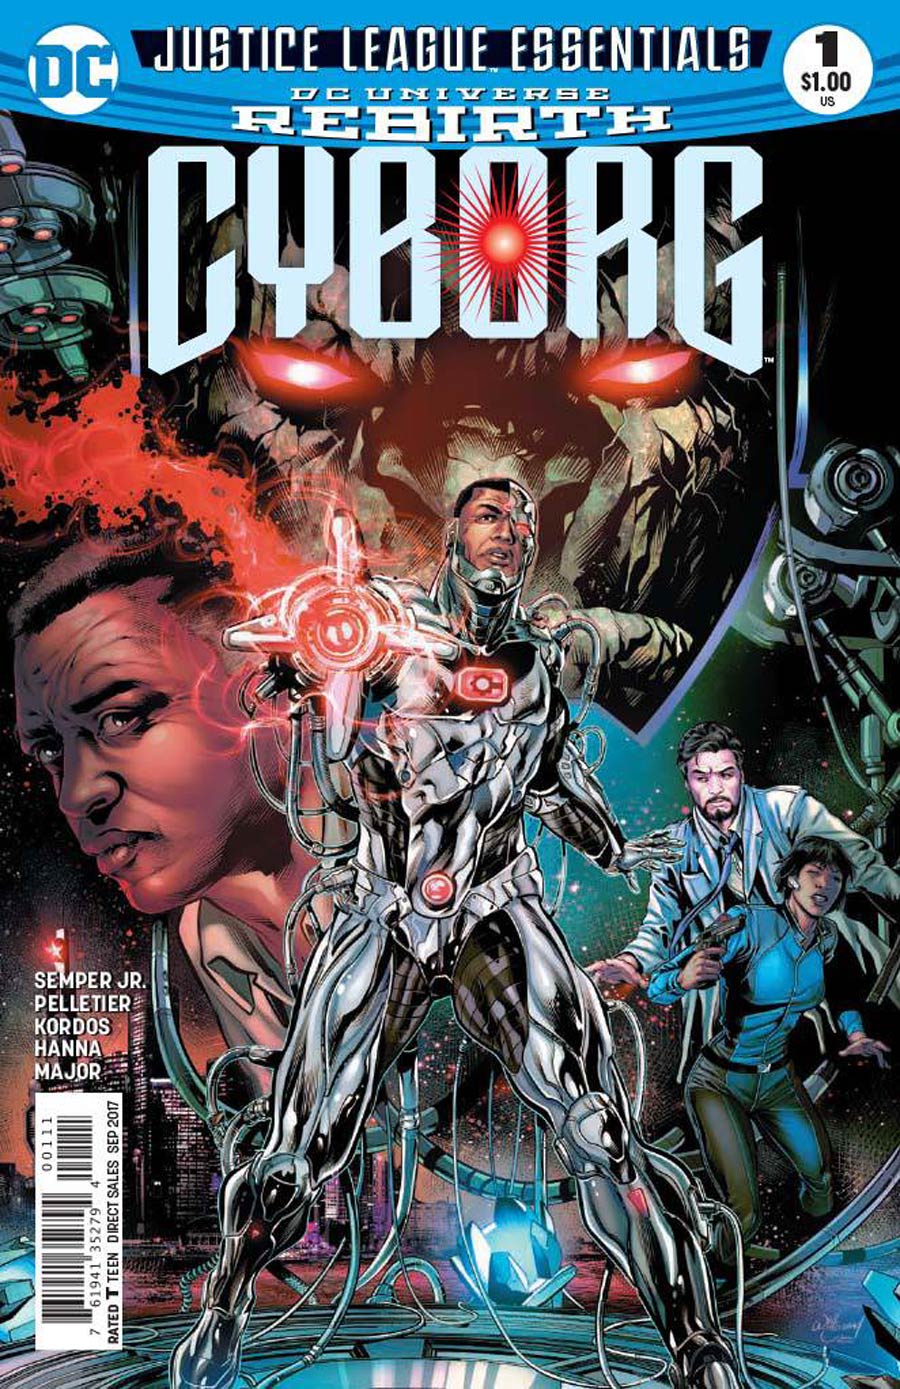 DC Justice League Essentials Cyborg #1 (Rebirth)